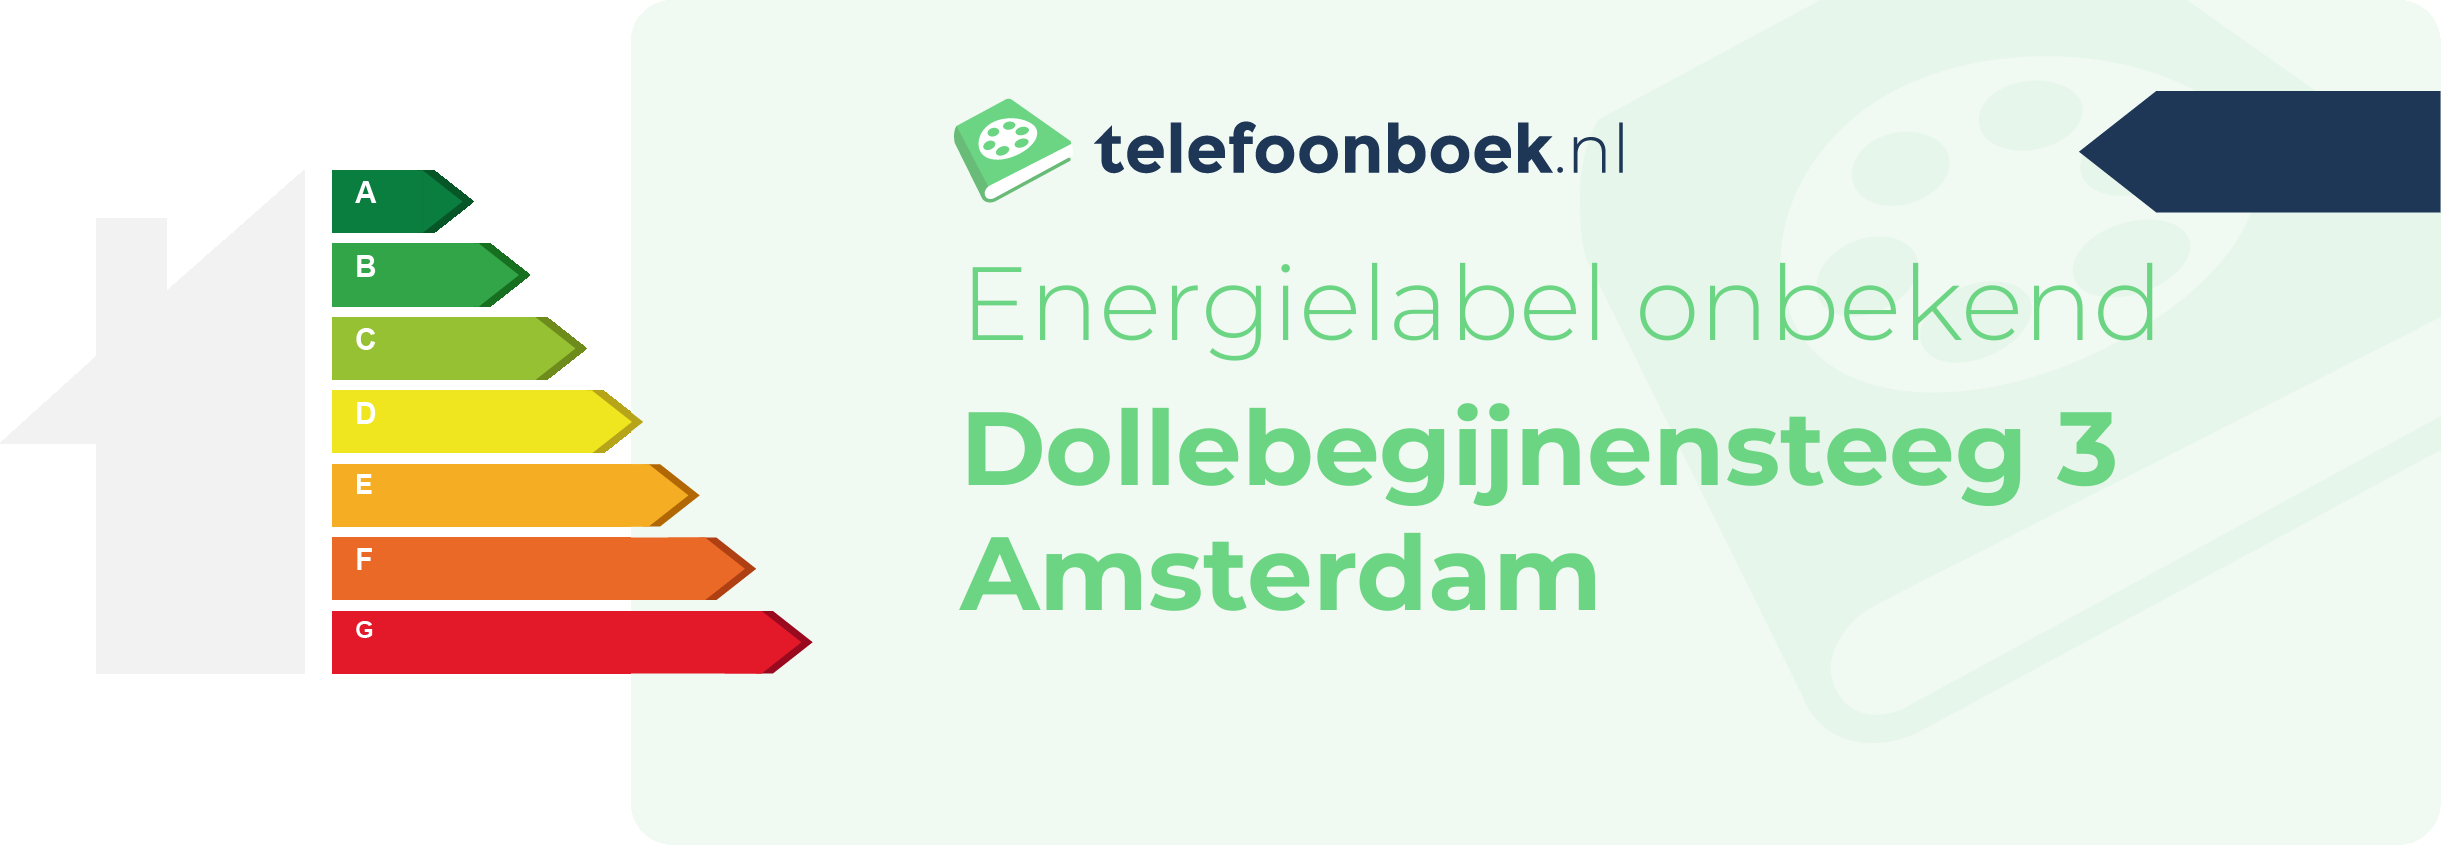 Energielabel Dollebegijnensteeg 3 Amsterdam